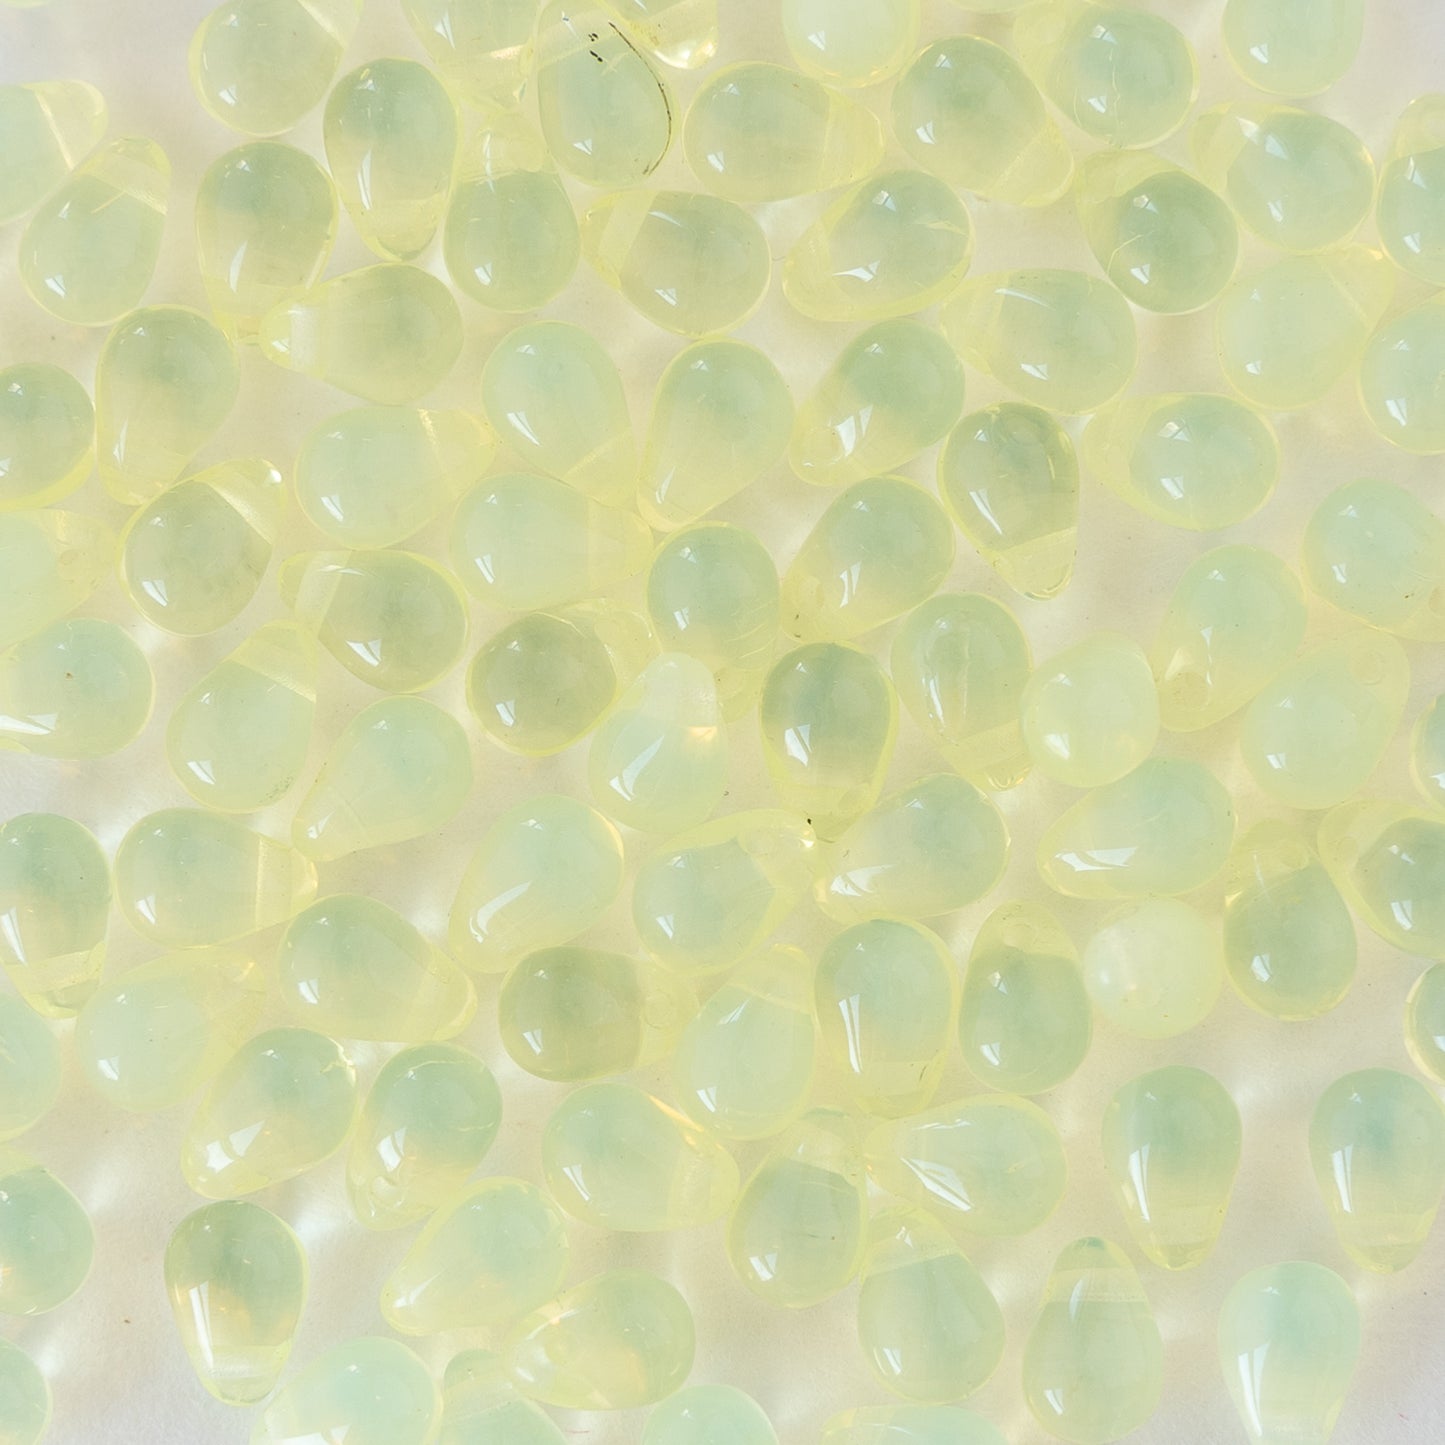 4x6mm Glass Teardrop Beads - Jonquil Yellow Opaline - 100 Beads